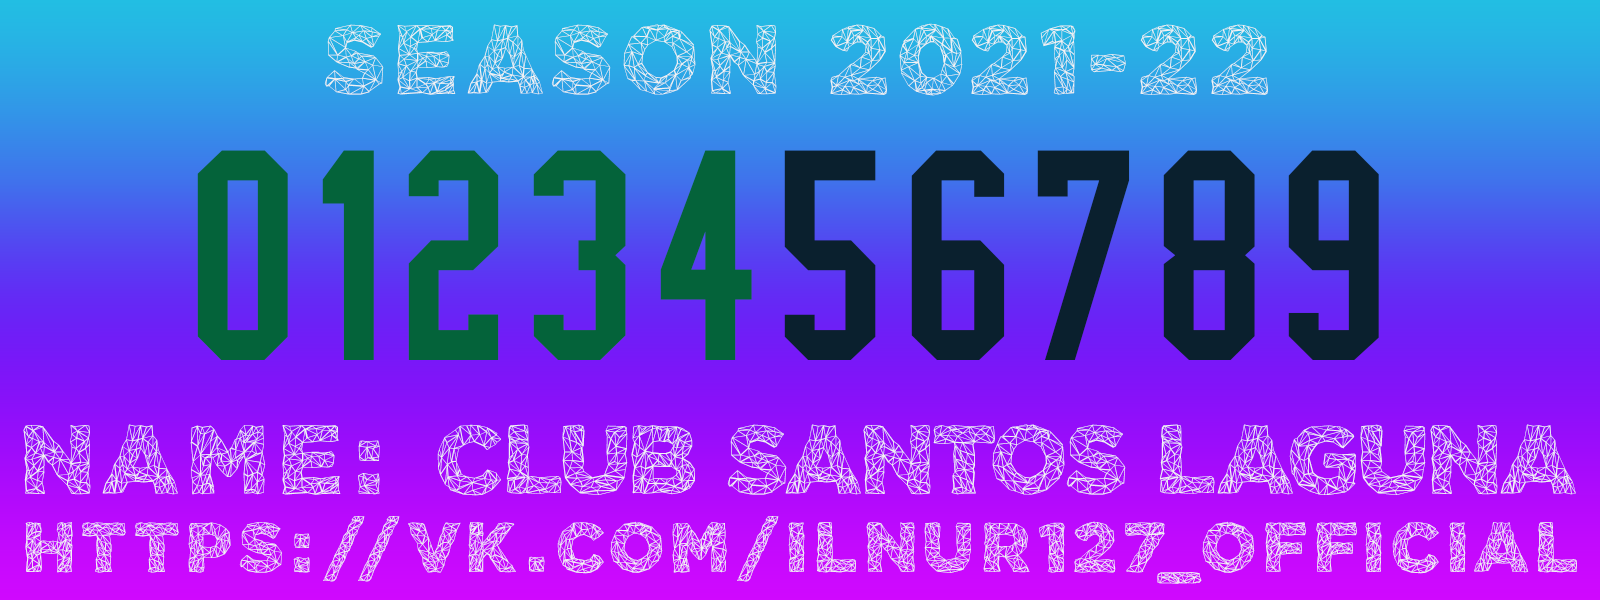 Club Santos Laguna 2021-22 (kitnumbers).png